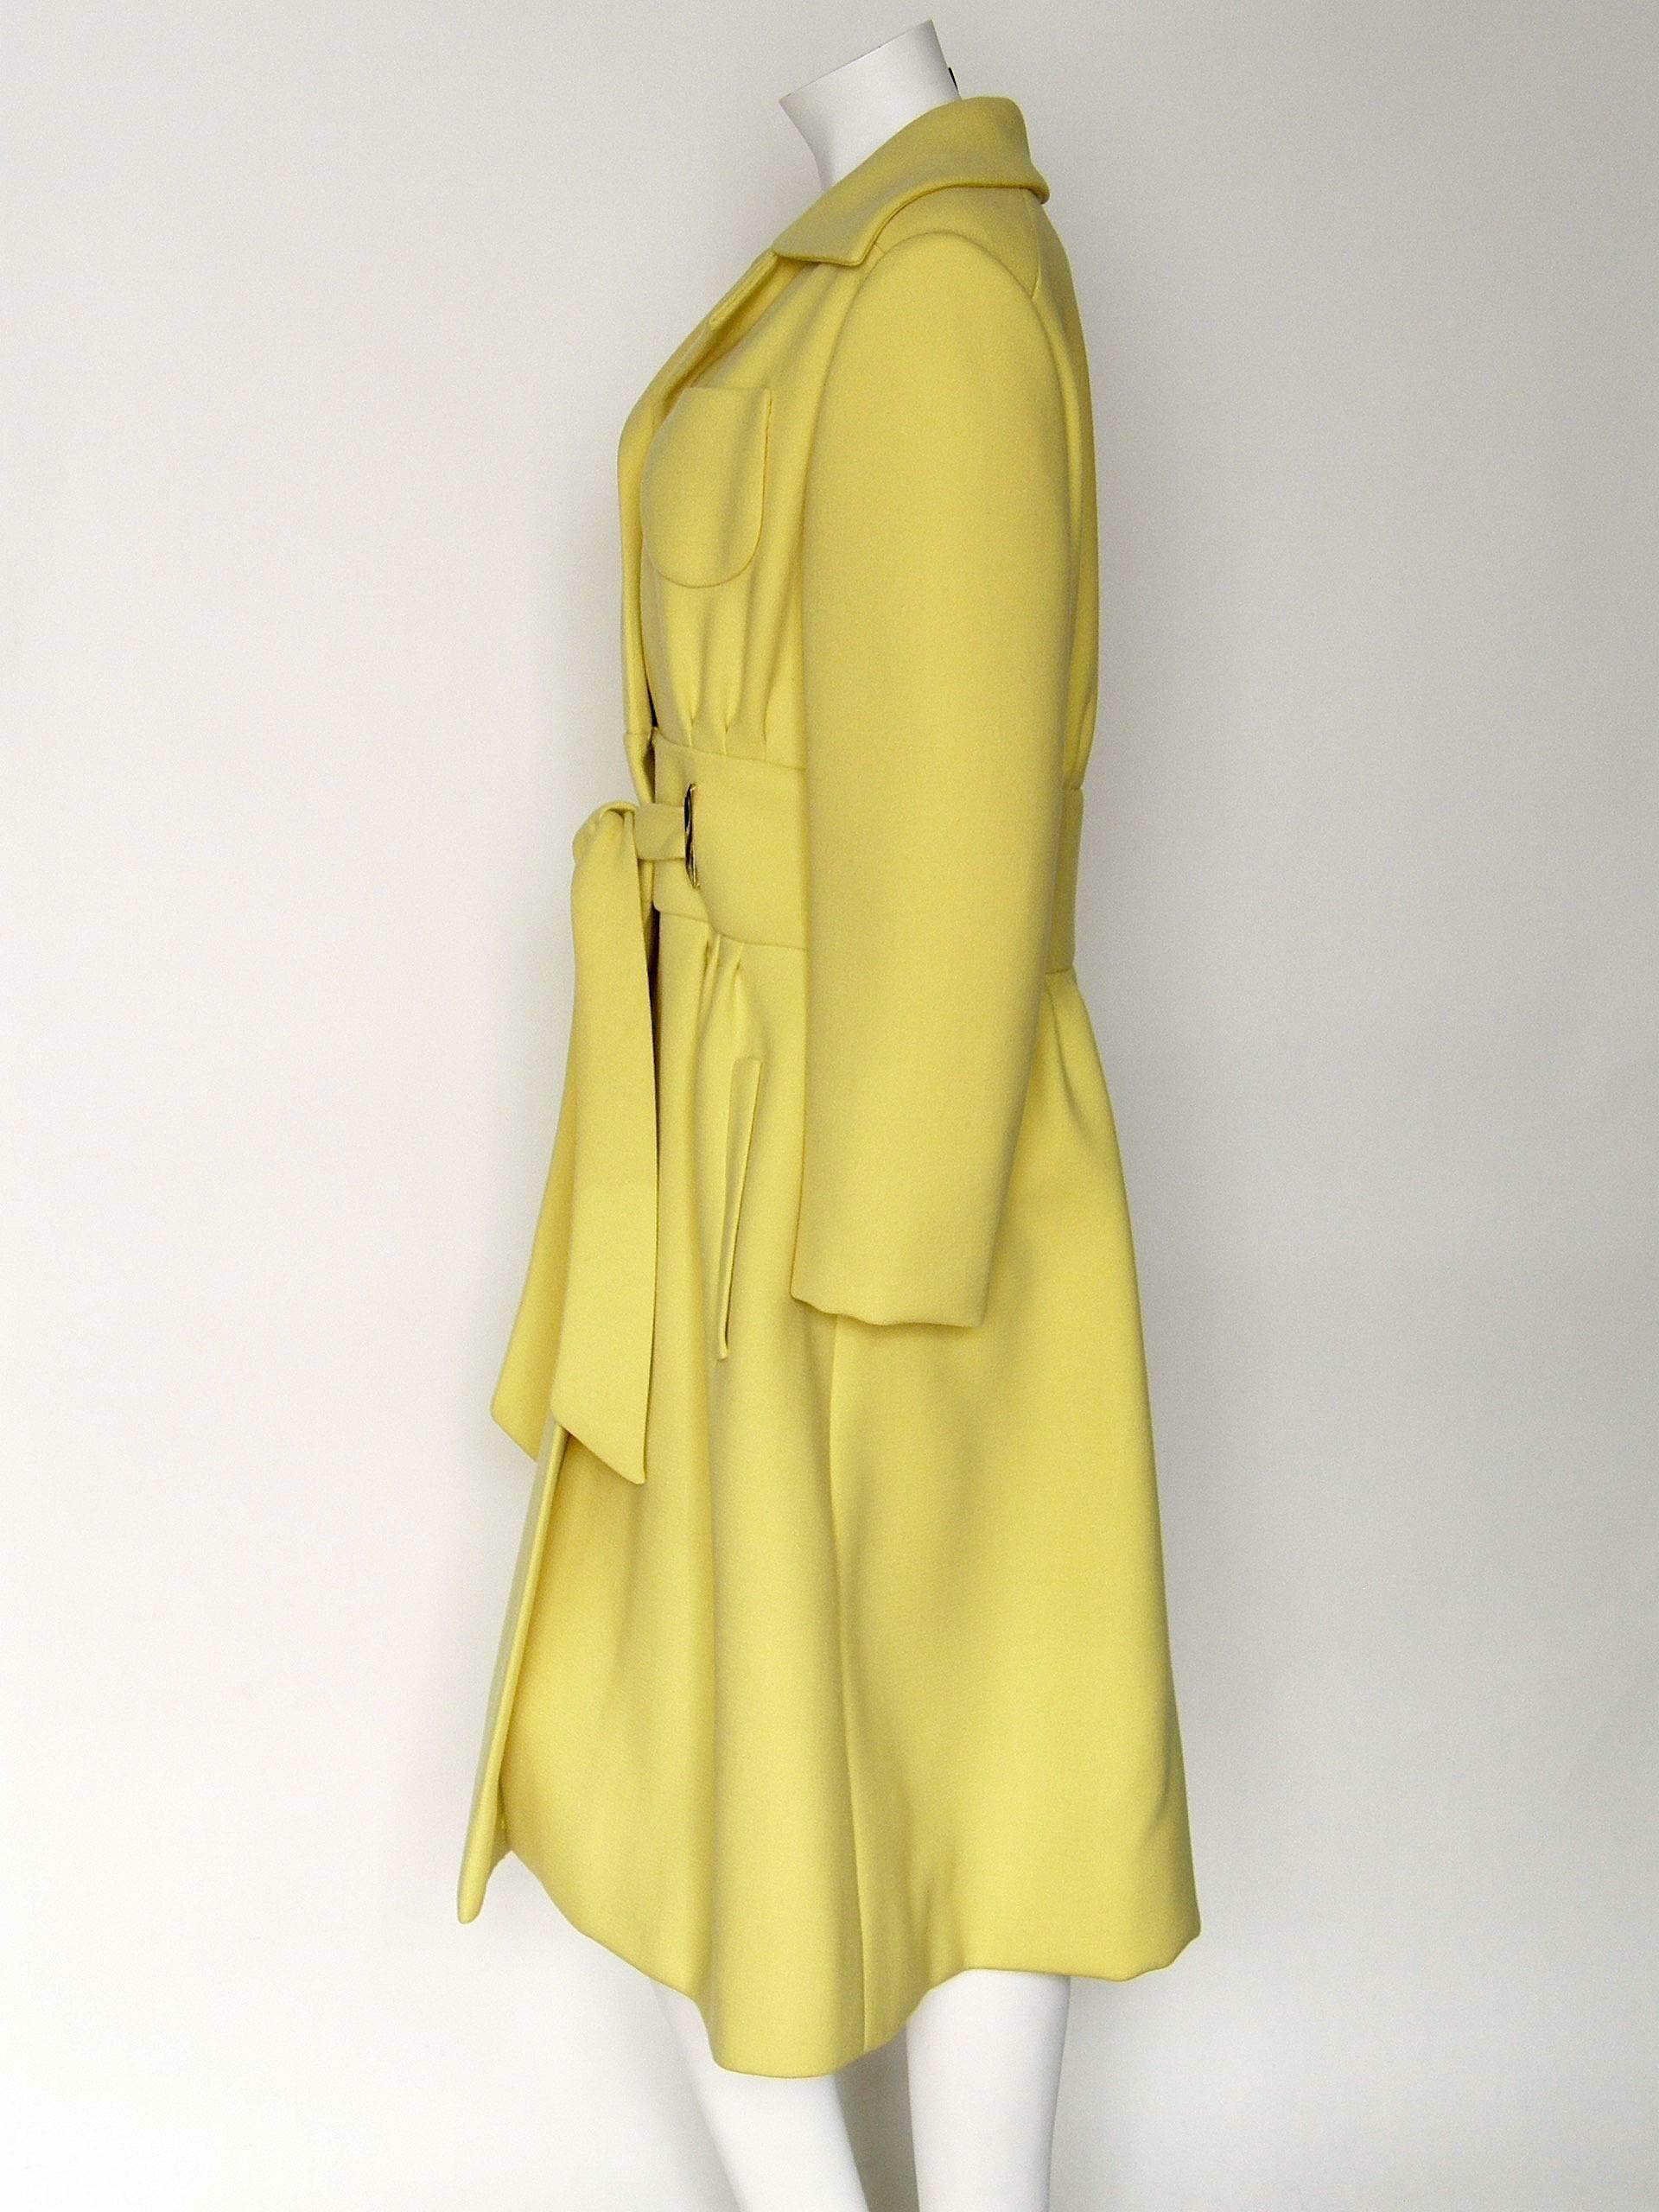 Mod Originala Coat Bright Yellow Wool with Tie Waist 1